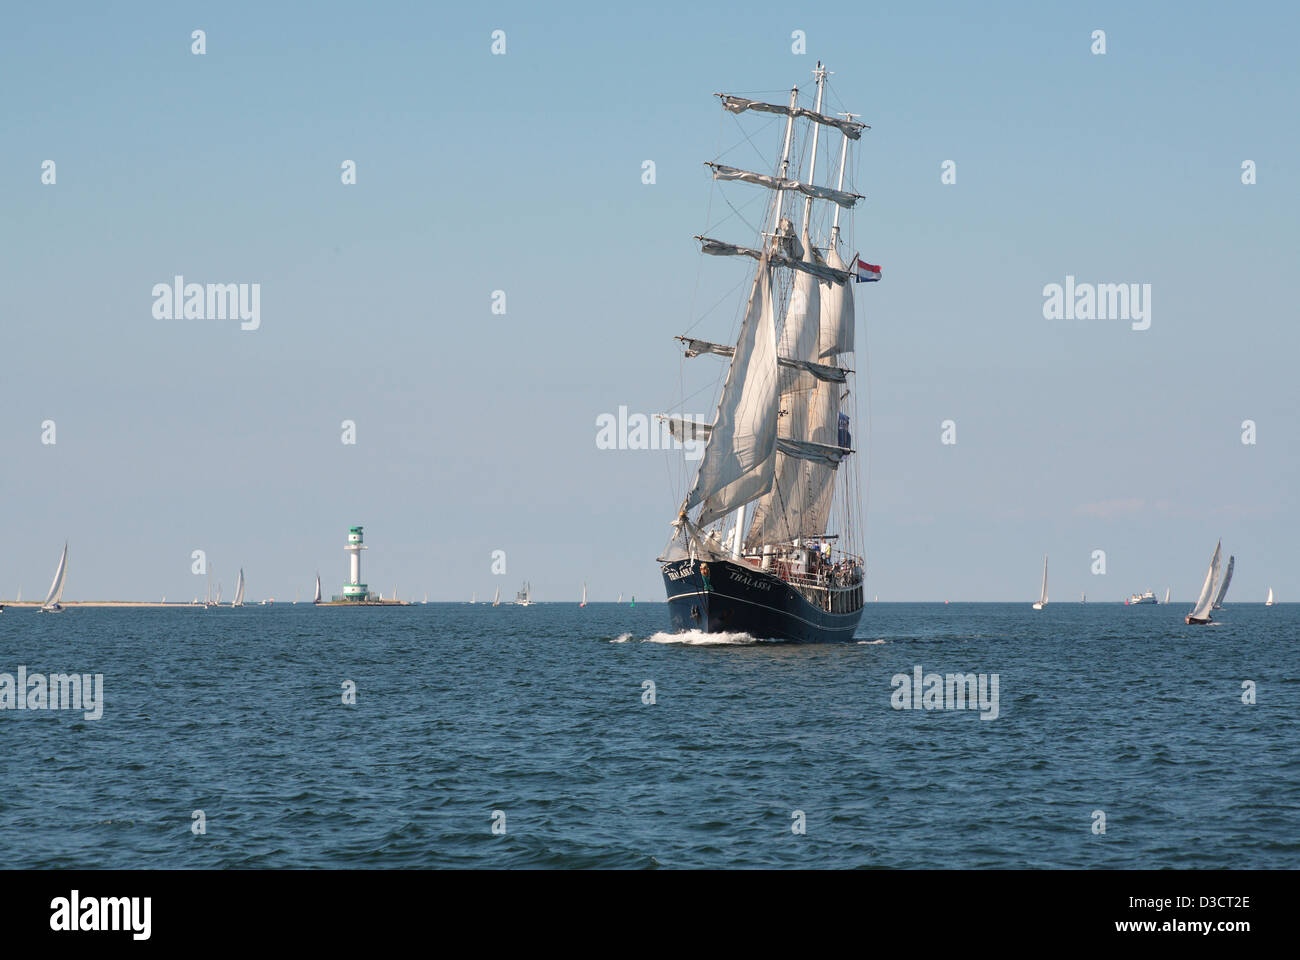 Kiel, Germania, la tre-masted barquentine Thalassa in Aussenfoerde Foto Stock